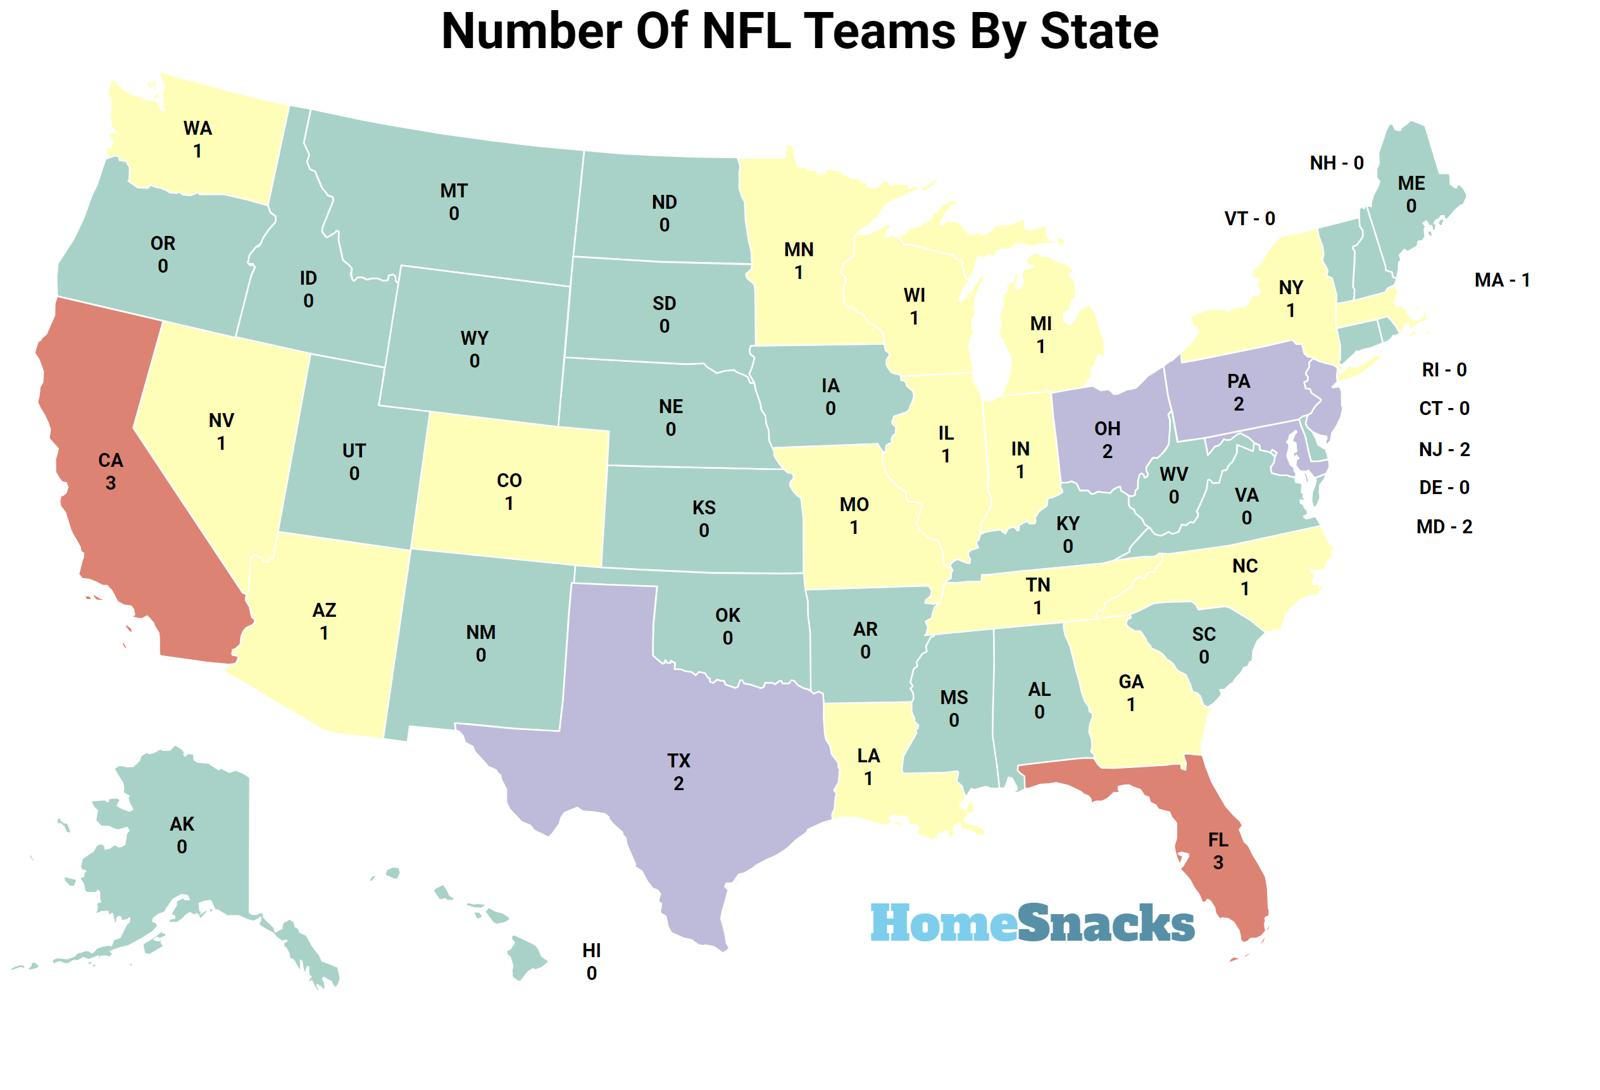 Number Of NFL Teams By State